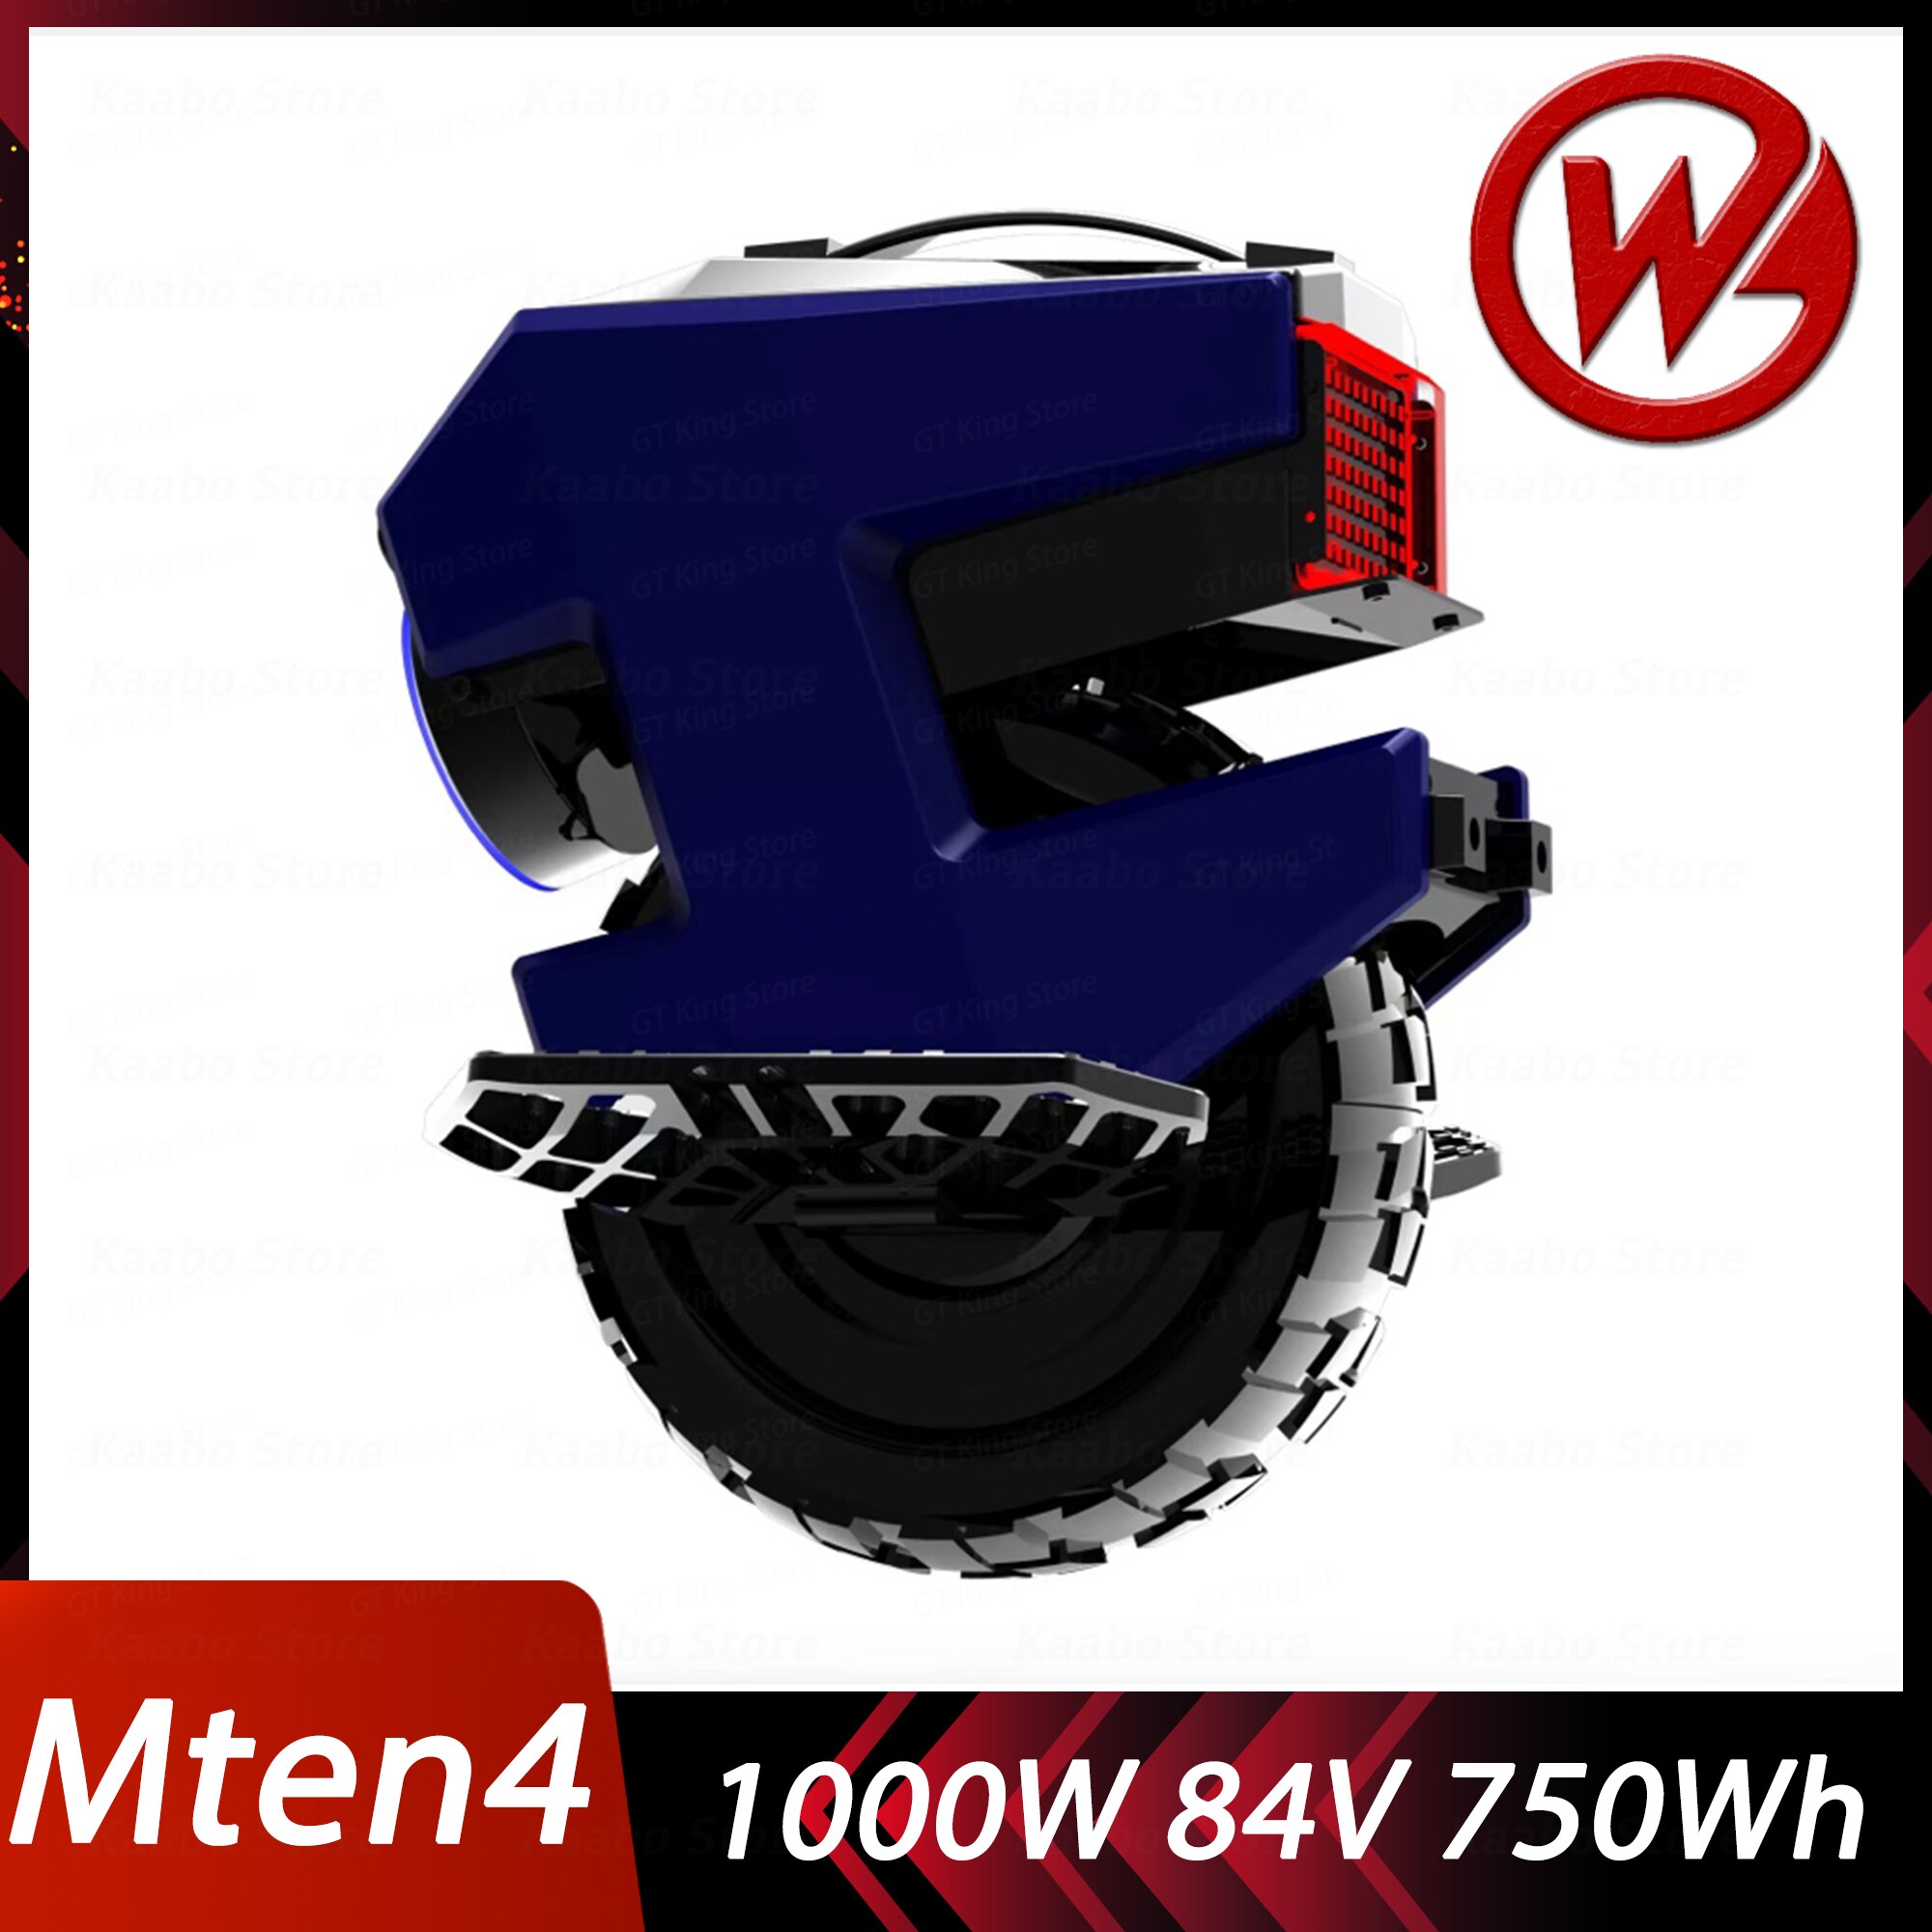 Begode-Mten4 전기 외발자전거, Gotway 신형 모노사이클 84V 750Wh 1000W 스마트 11 인치 휠 Mten 4 전기 모노 휠, 재고 있음